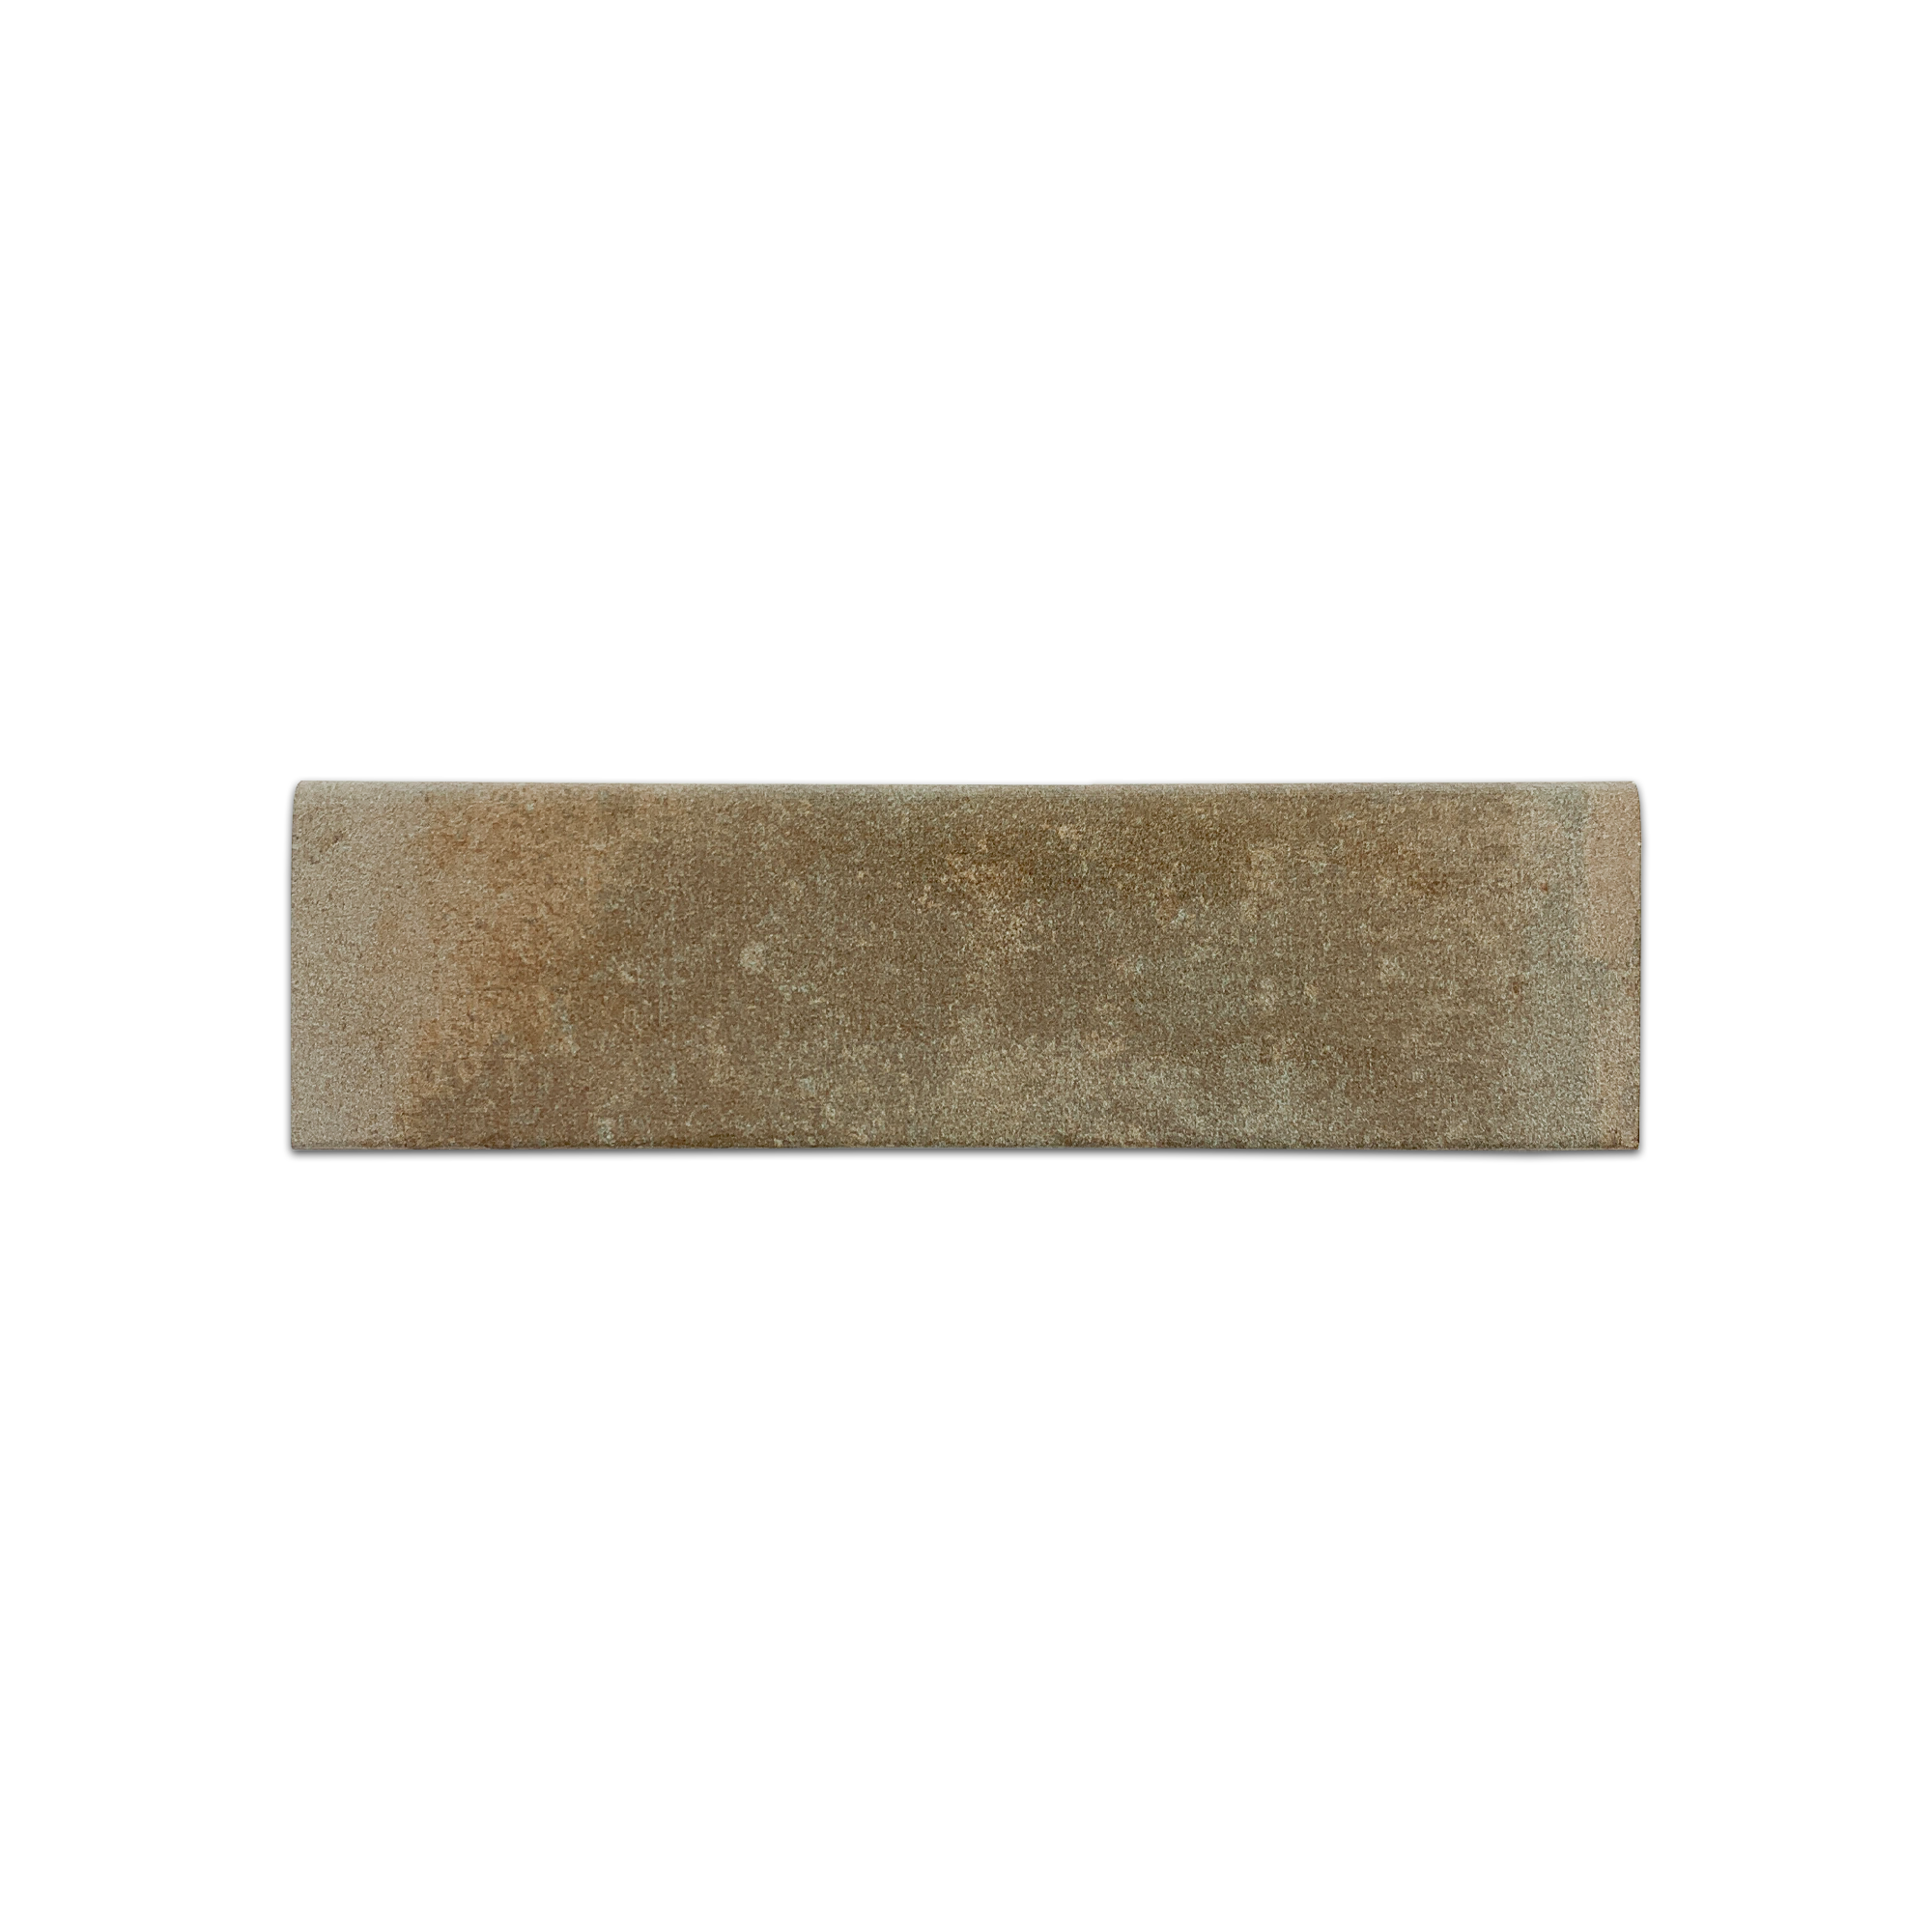 Elon Boston Brick West Porcelain Bullnose Tile, 3.5x14, Natural Pressed Finish, SKU BC140 - Surface Group International